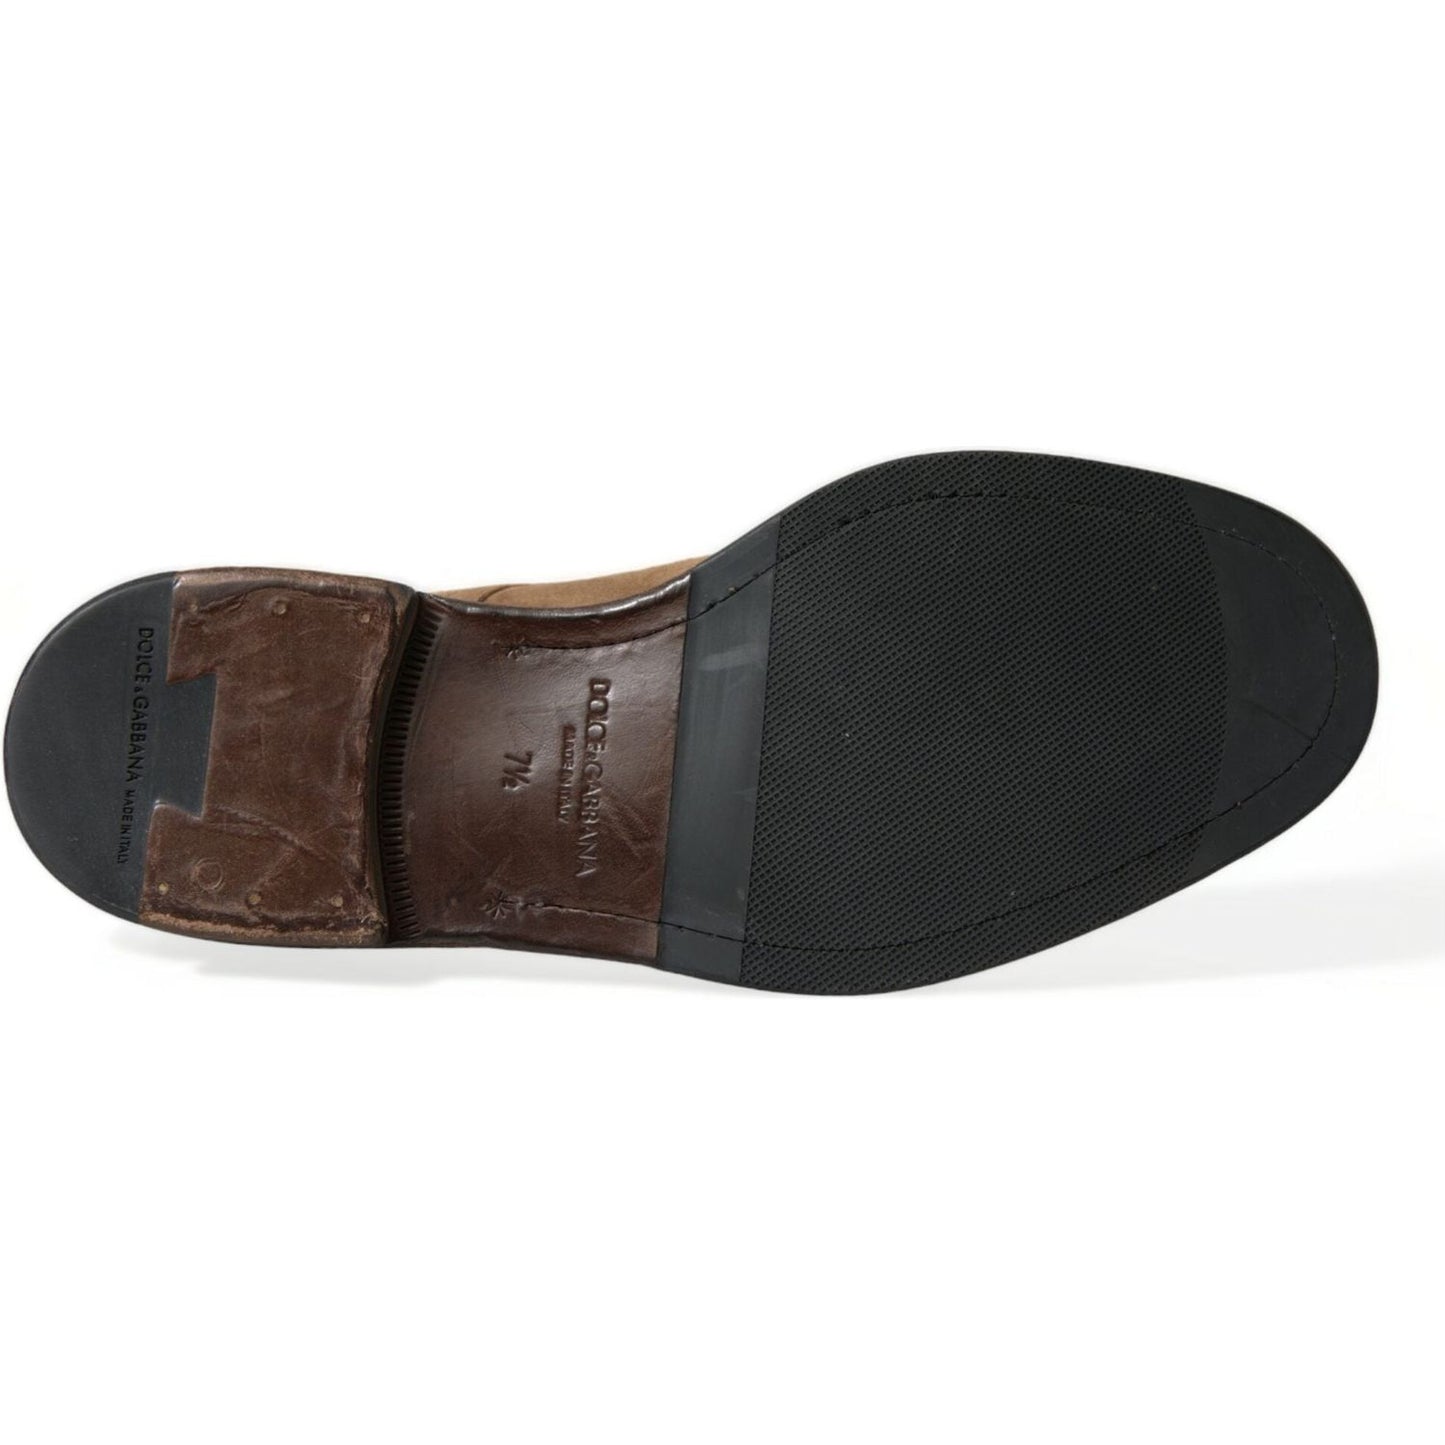 Dolce & Gabbana Elegant Leather Ankle Lace-Up Boots brown-leather-lace-up-ankle-boots-shoes